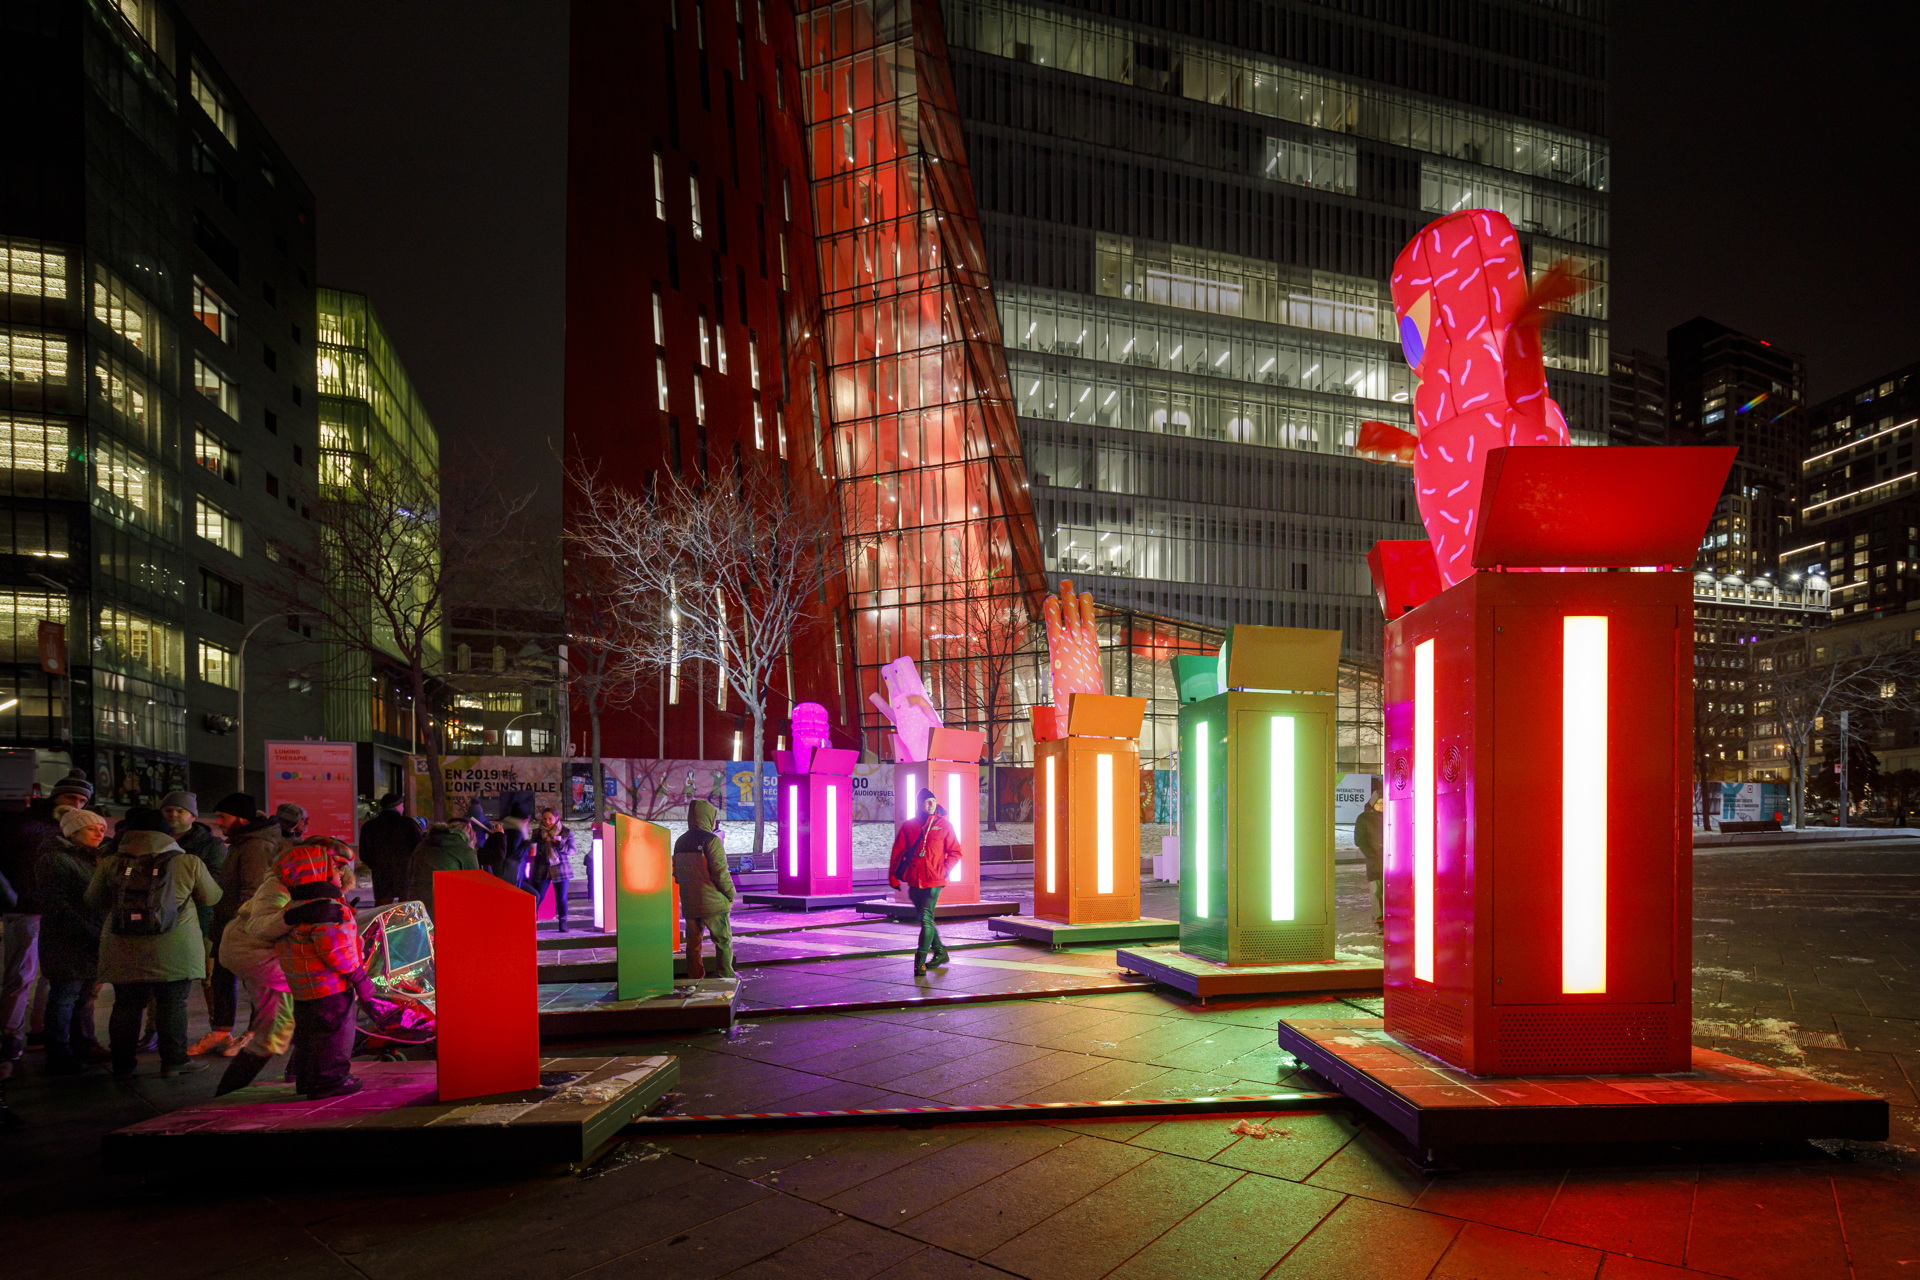 Luminothérapie: 10 years of winter creativity in Montreal | Livegreenblog